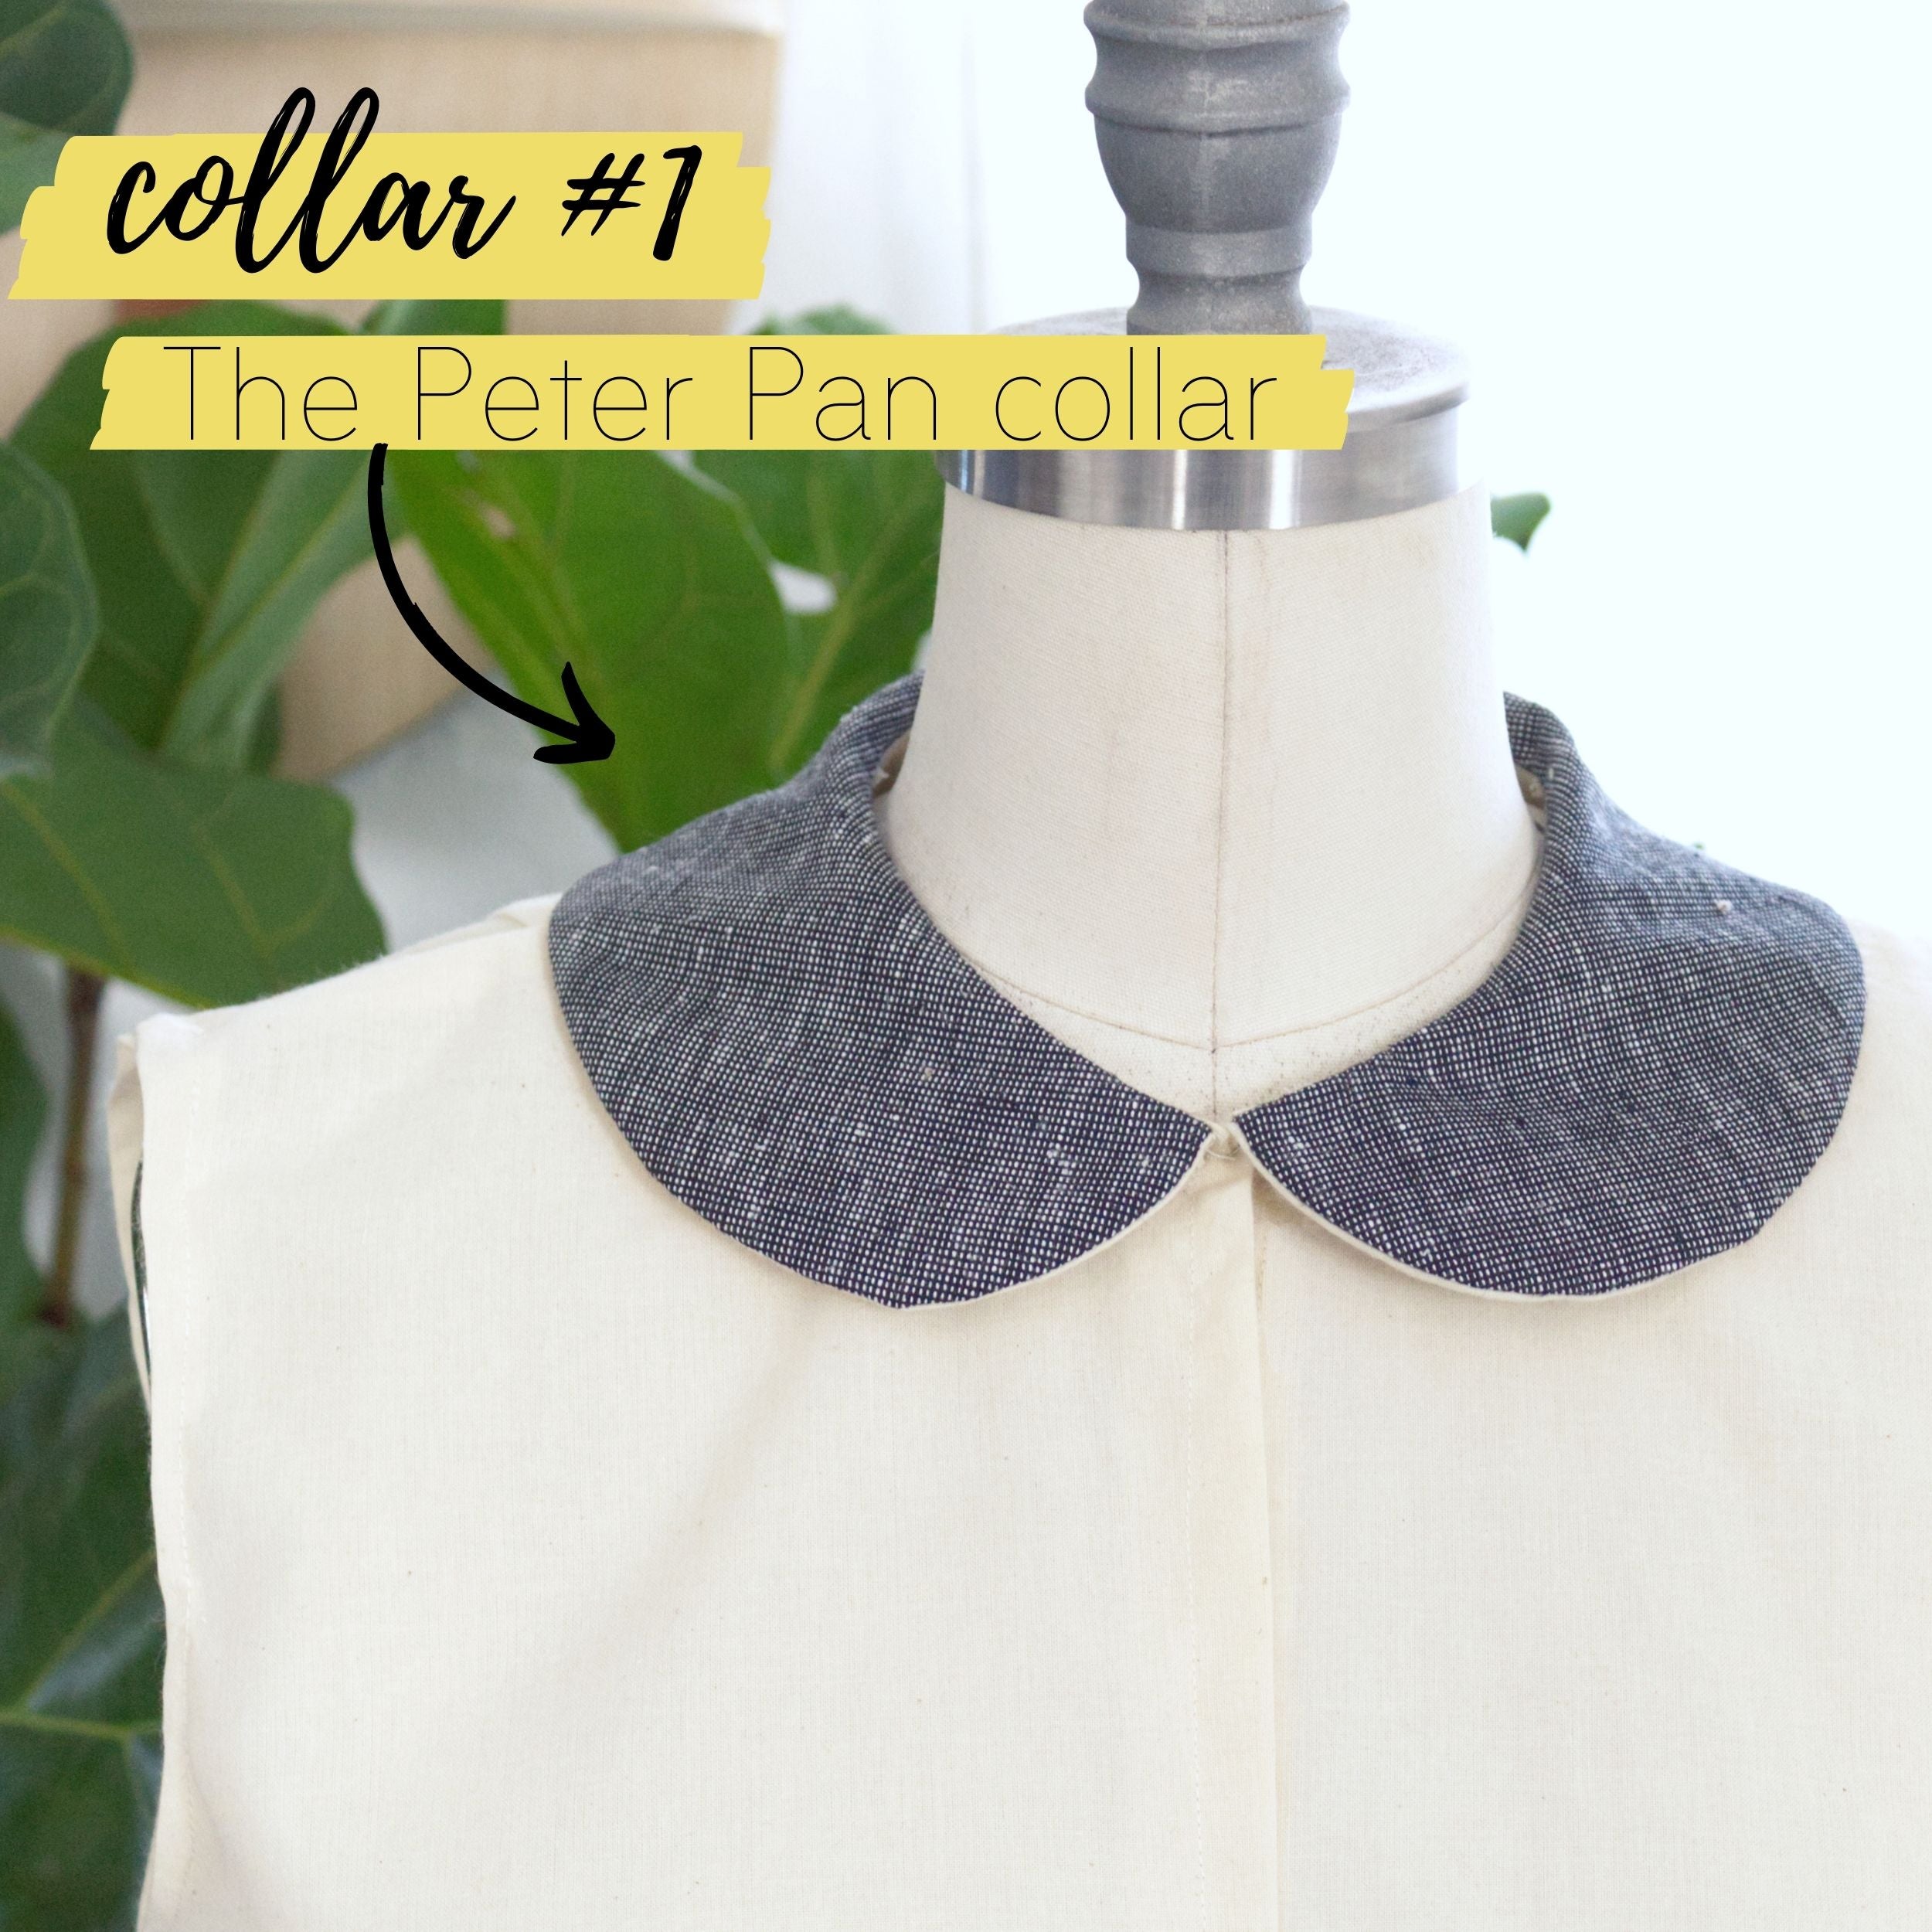 Construction details: The Peter Pan collar